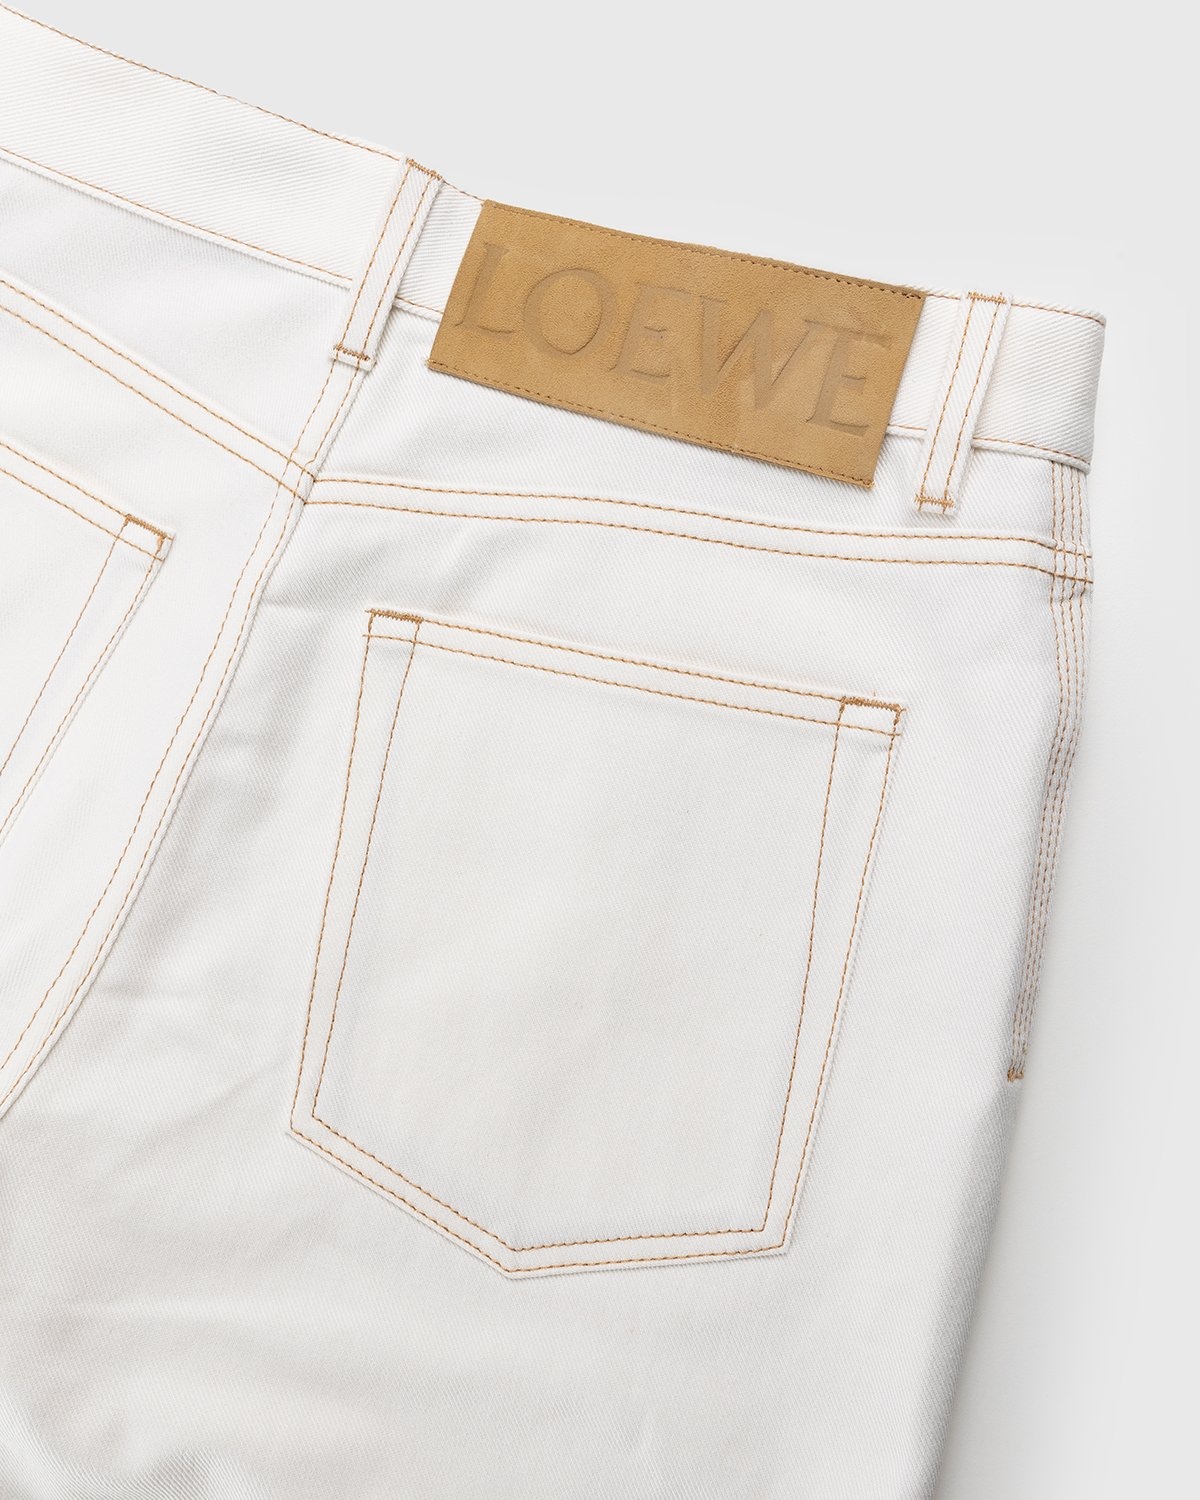 Loewe – Paula's Ibiza Boot Cut Denim Trousers White - Pants - White - Image 3